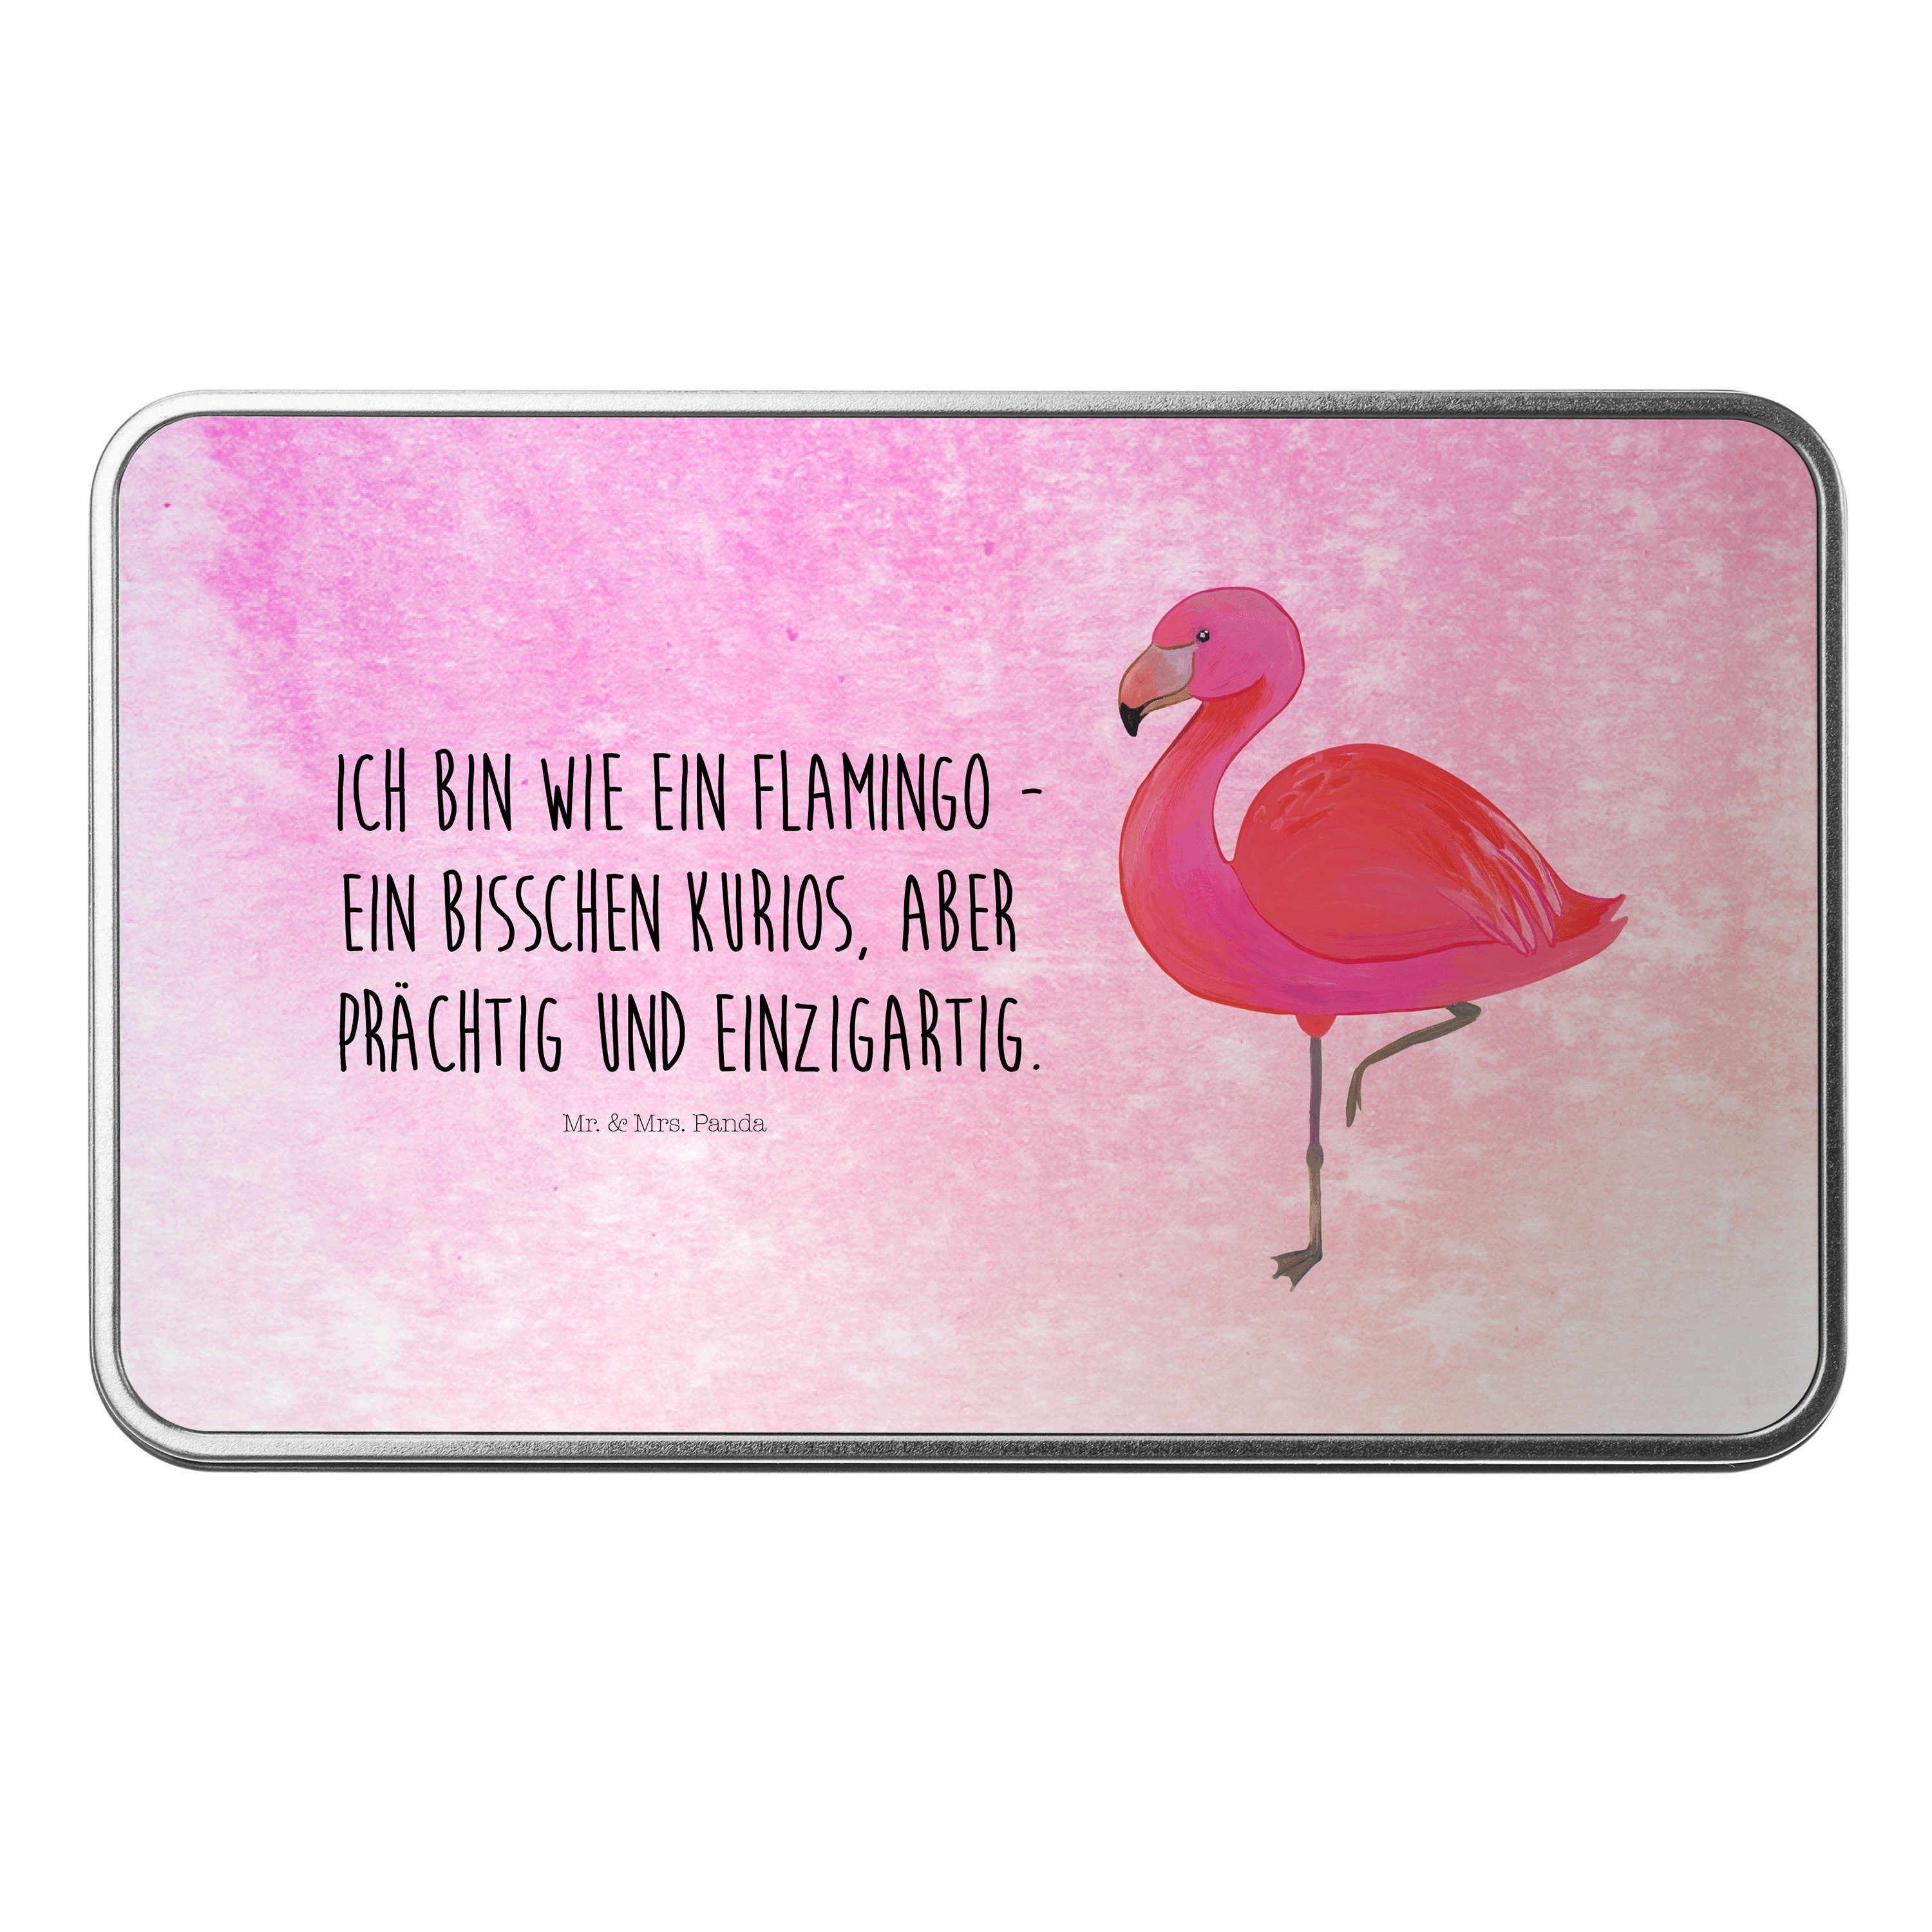 Mr. & Mrs. Panda Dose Flamingo classic - Aquarell Pink - Geschenk, Vorratsbox, Metalldose, (1 St)